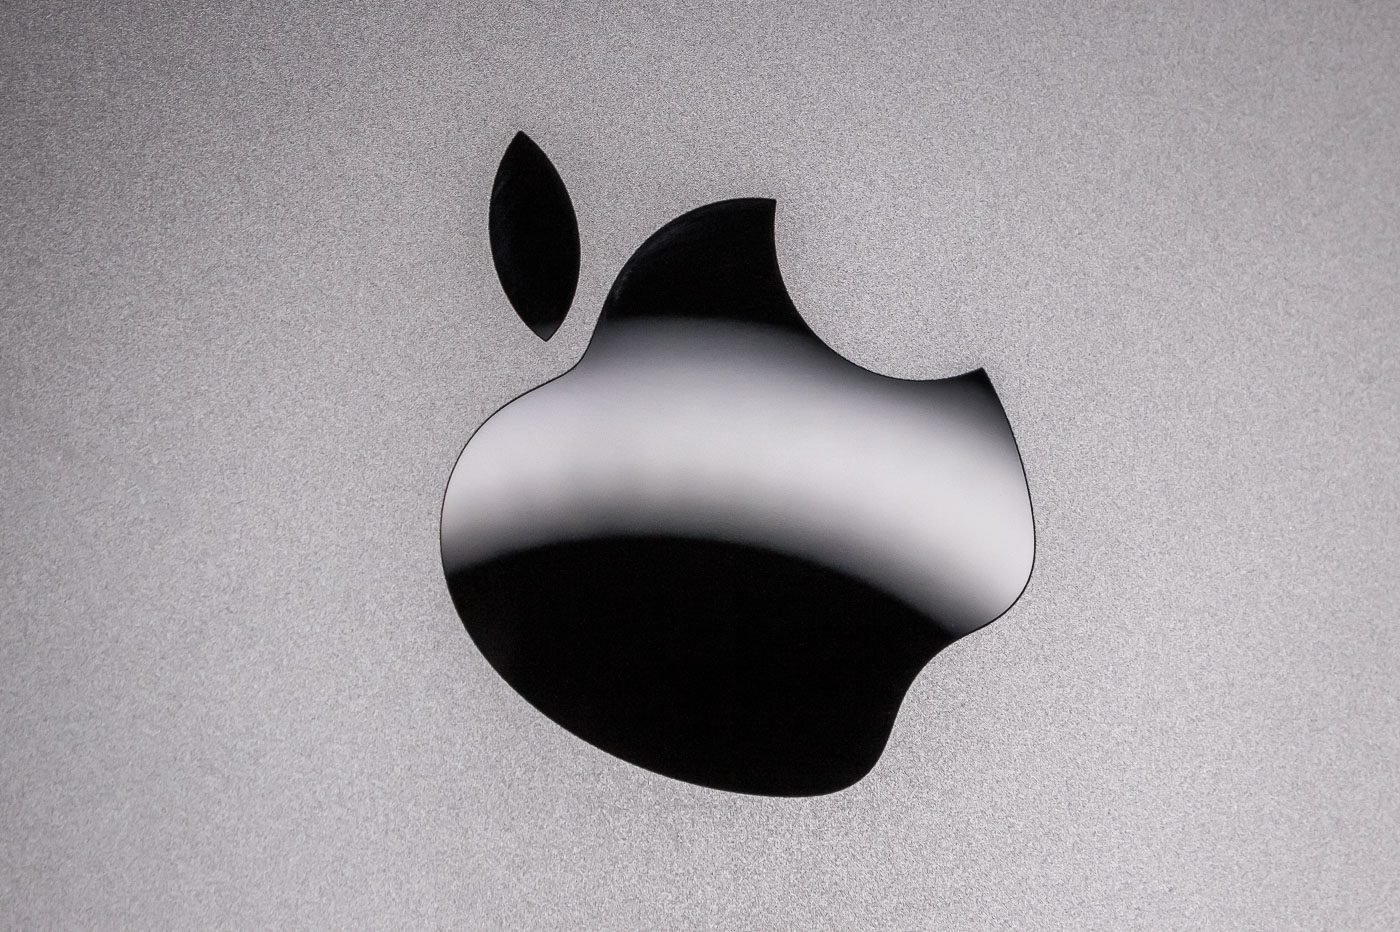 Le logo Apple et son effet miroir est la seule fioriture esthétique de ce design ultra-minimaliste.